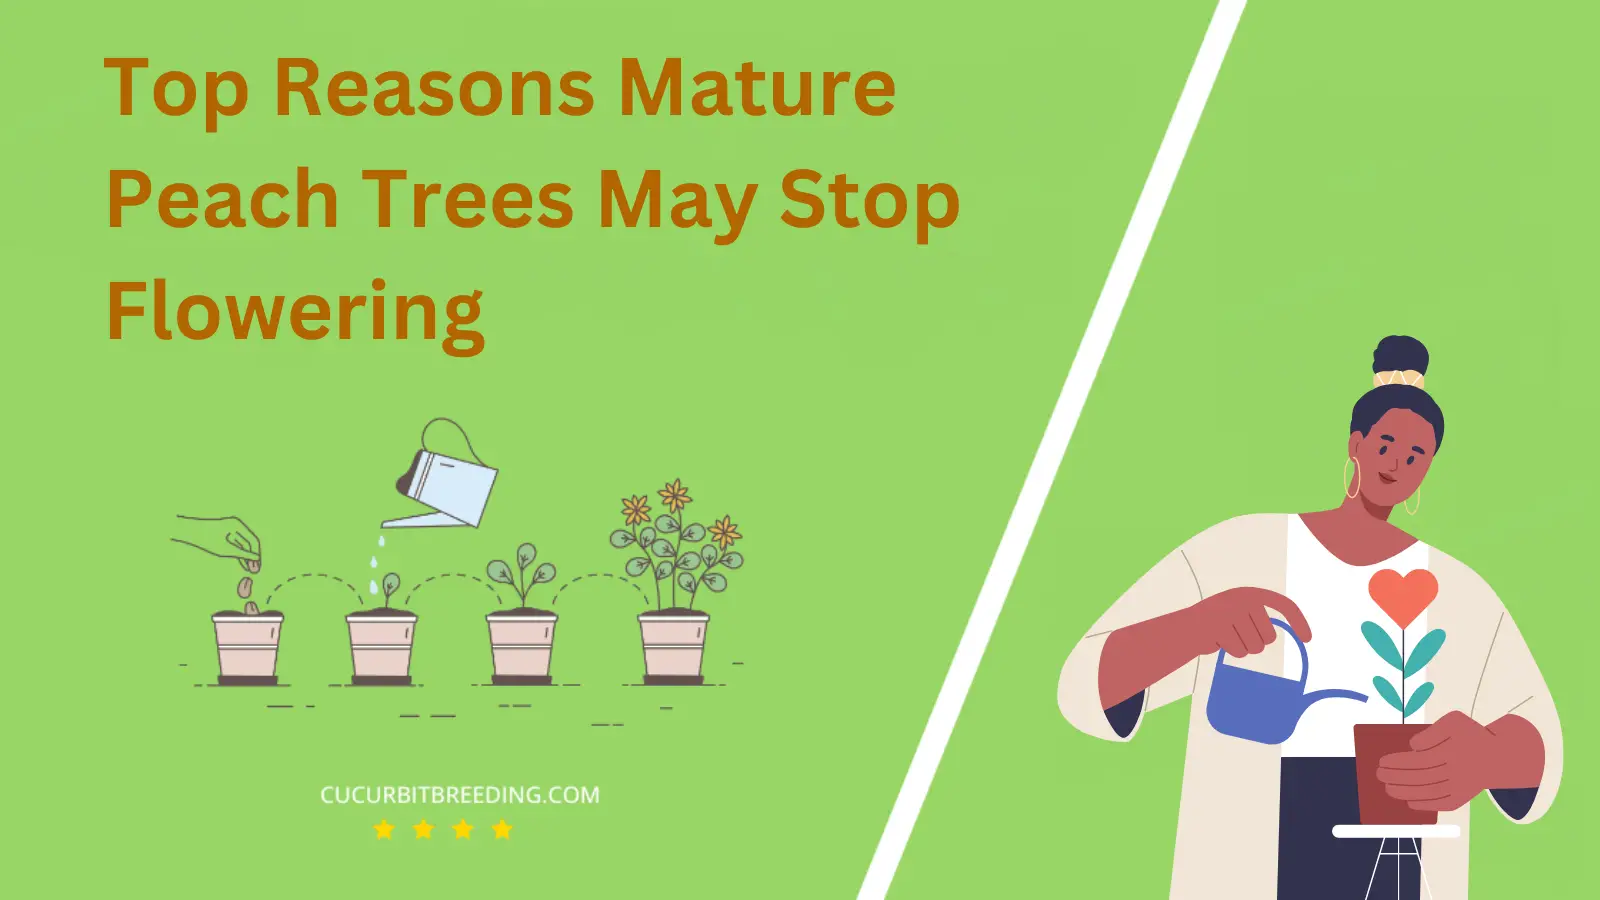 Top Reasons Mature Peach Trees May Stop Flowering